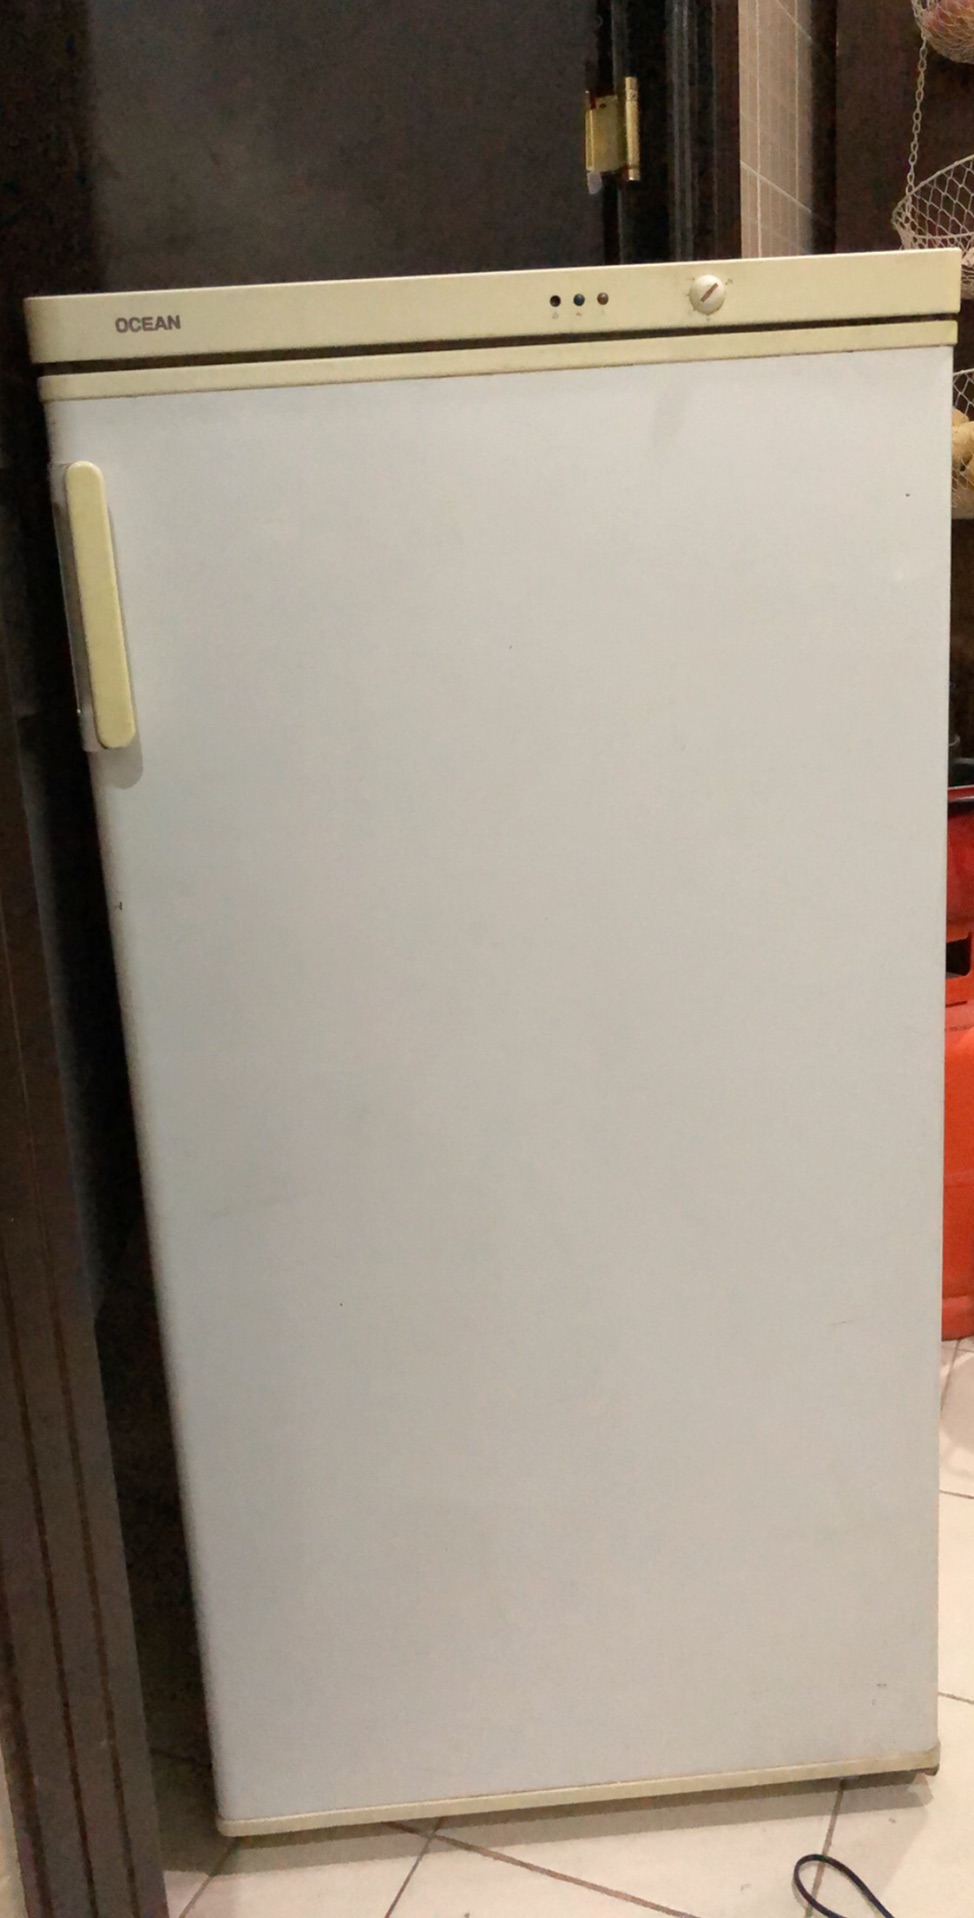 Hitachi latest model fridge with 2 doors up and down-  فريزر دروج لا تنسَ أنك...